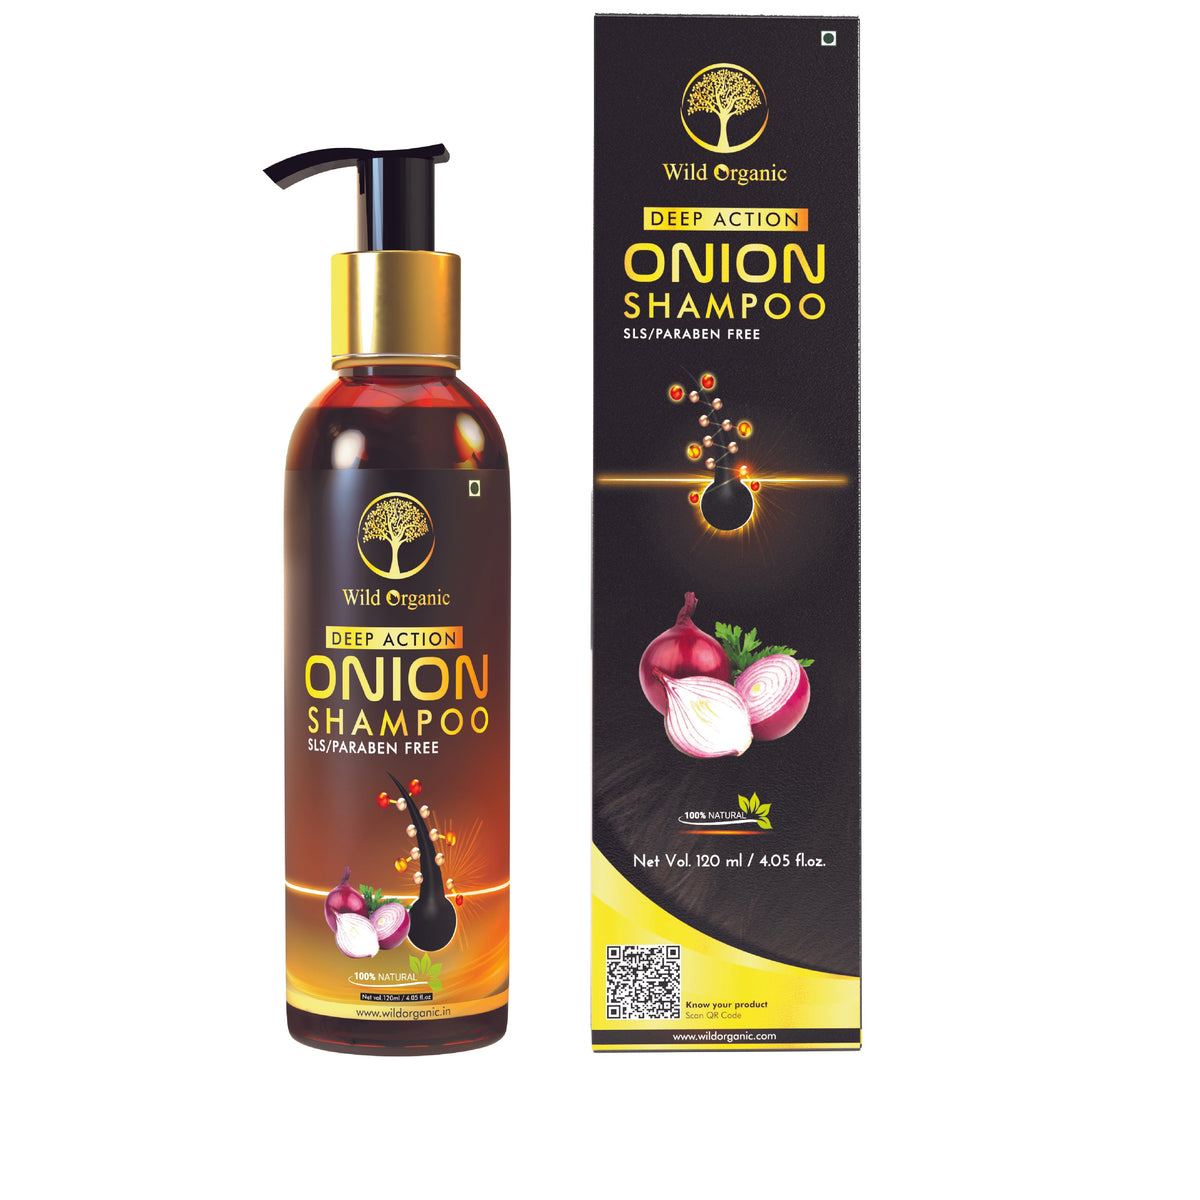 Onion shampoo sls and paraben free 120ml